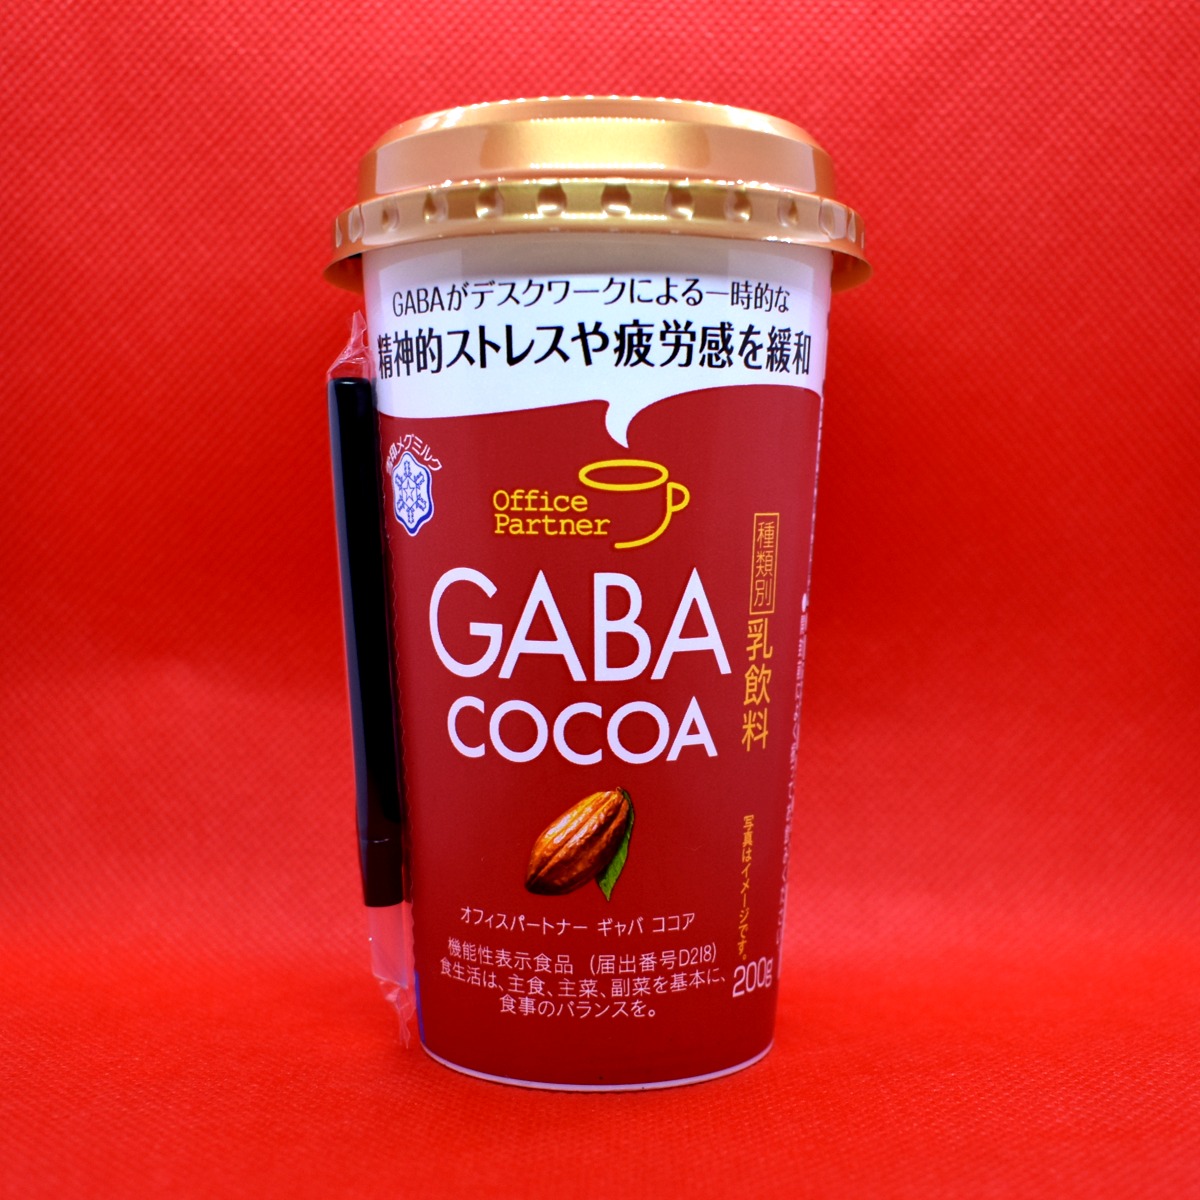 GABA Cocoa Functional Drink Japanese Market